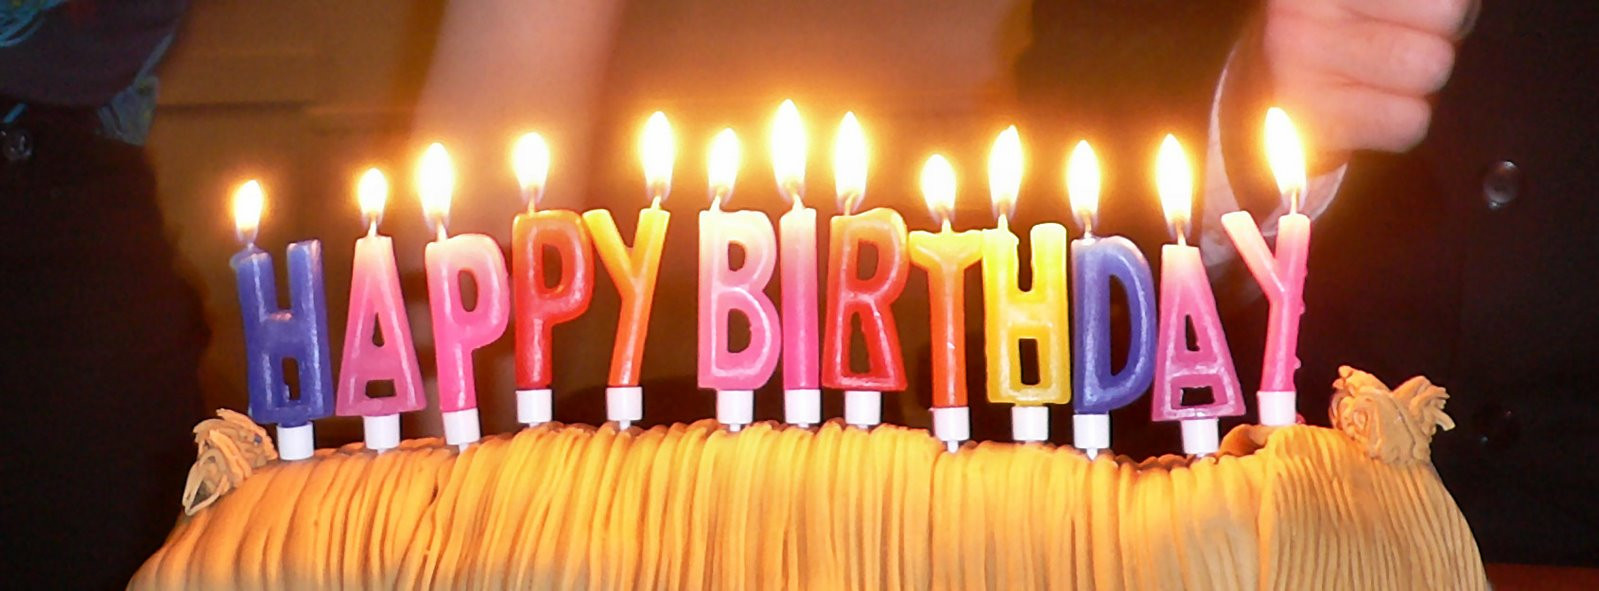 Image Of Birthday Wishes
 Animated Birthday Birthday Greetings